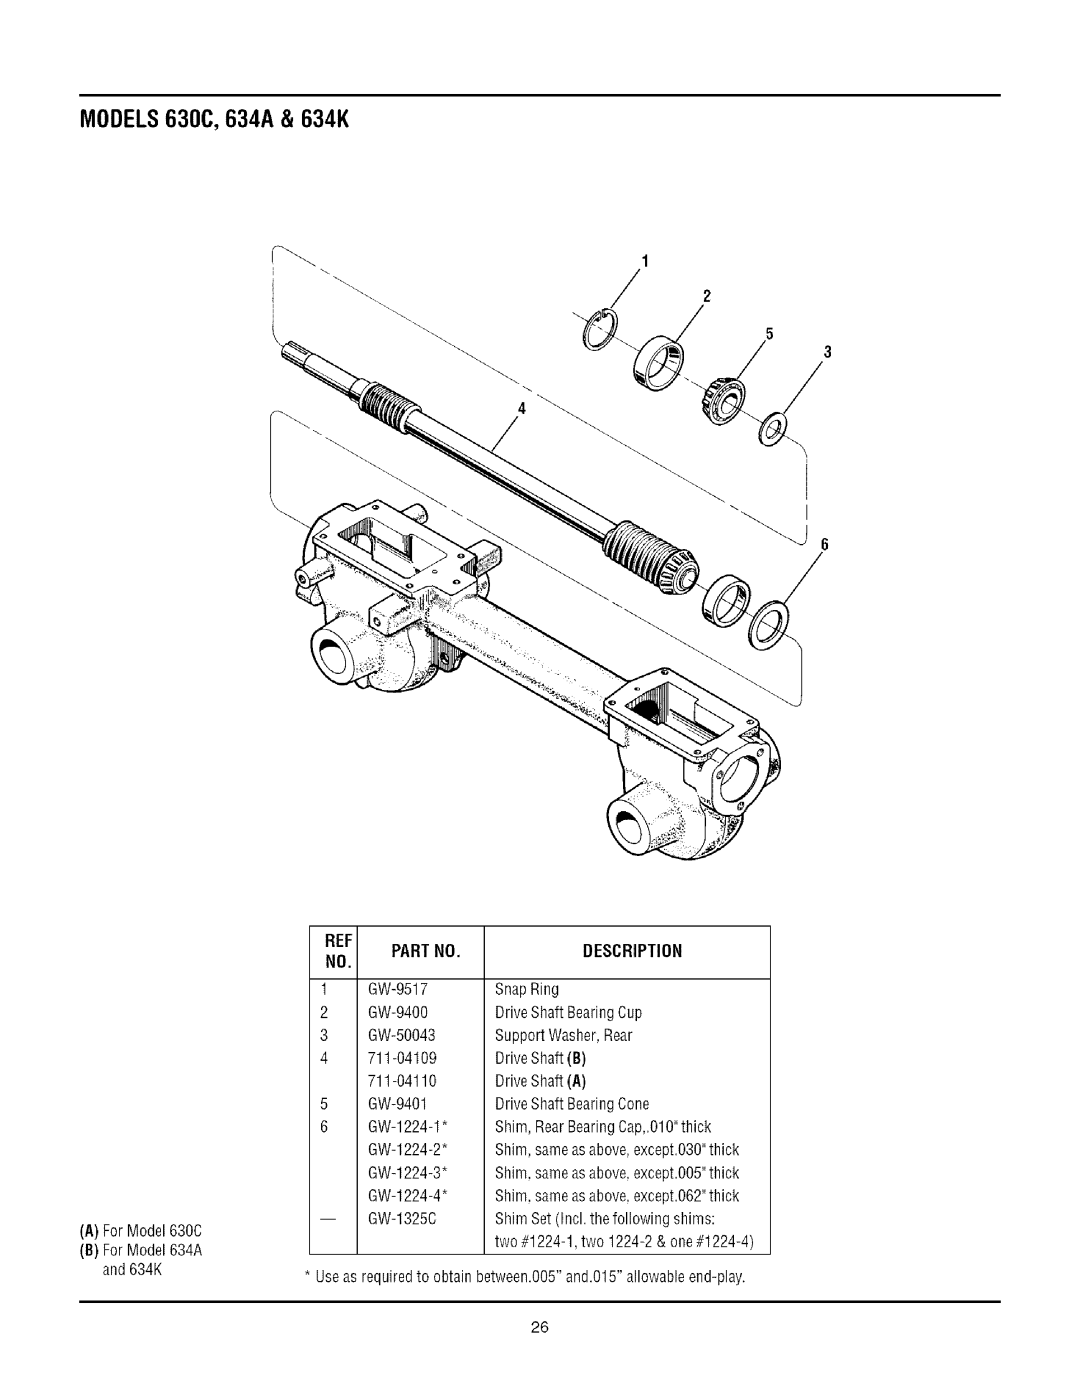 Troy-Bilt manual MODELS630C, 634A & 634K, A For Model 